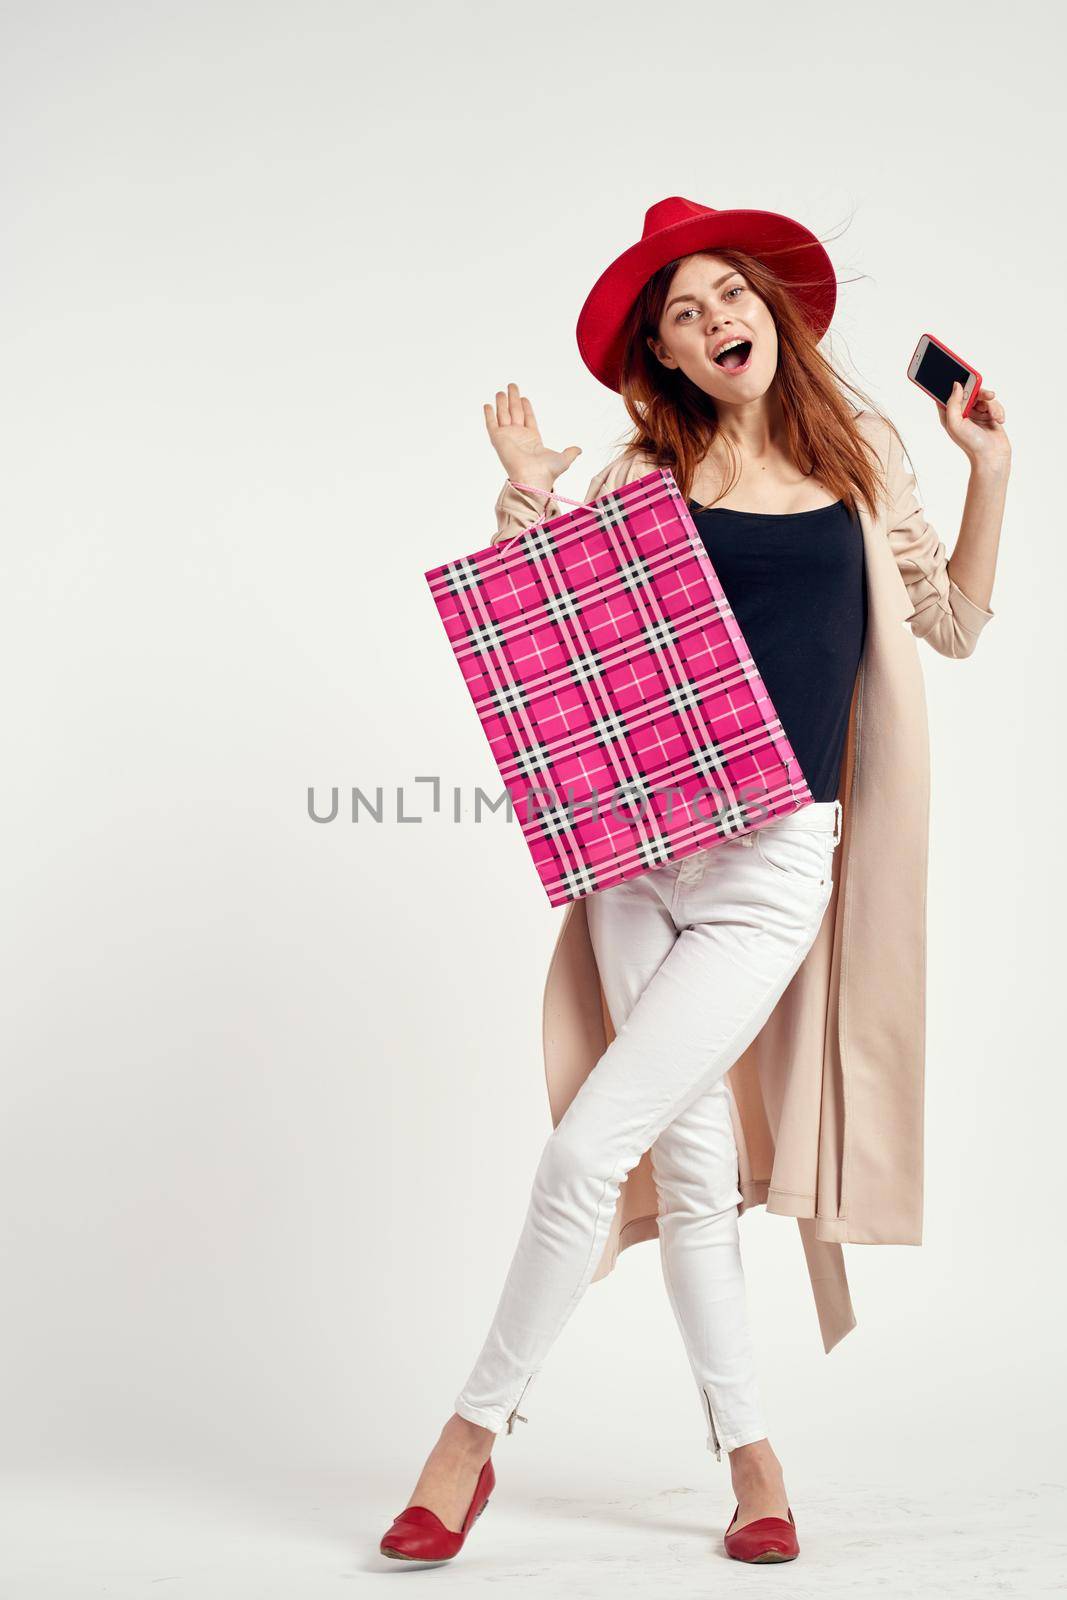 beautiful woman wearing a red hat posing shopping fun light background by Vichizh